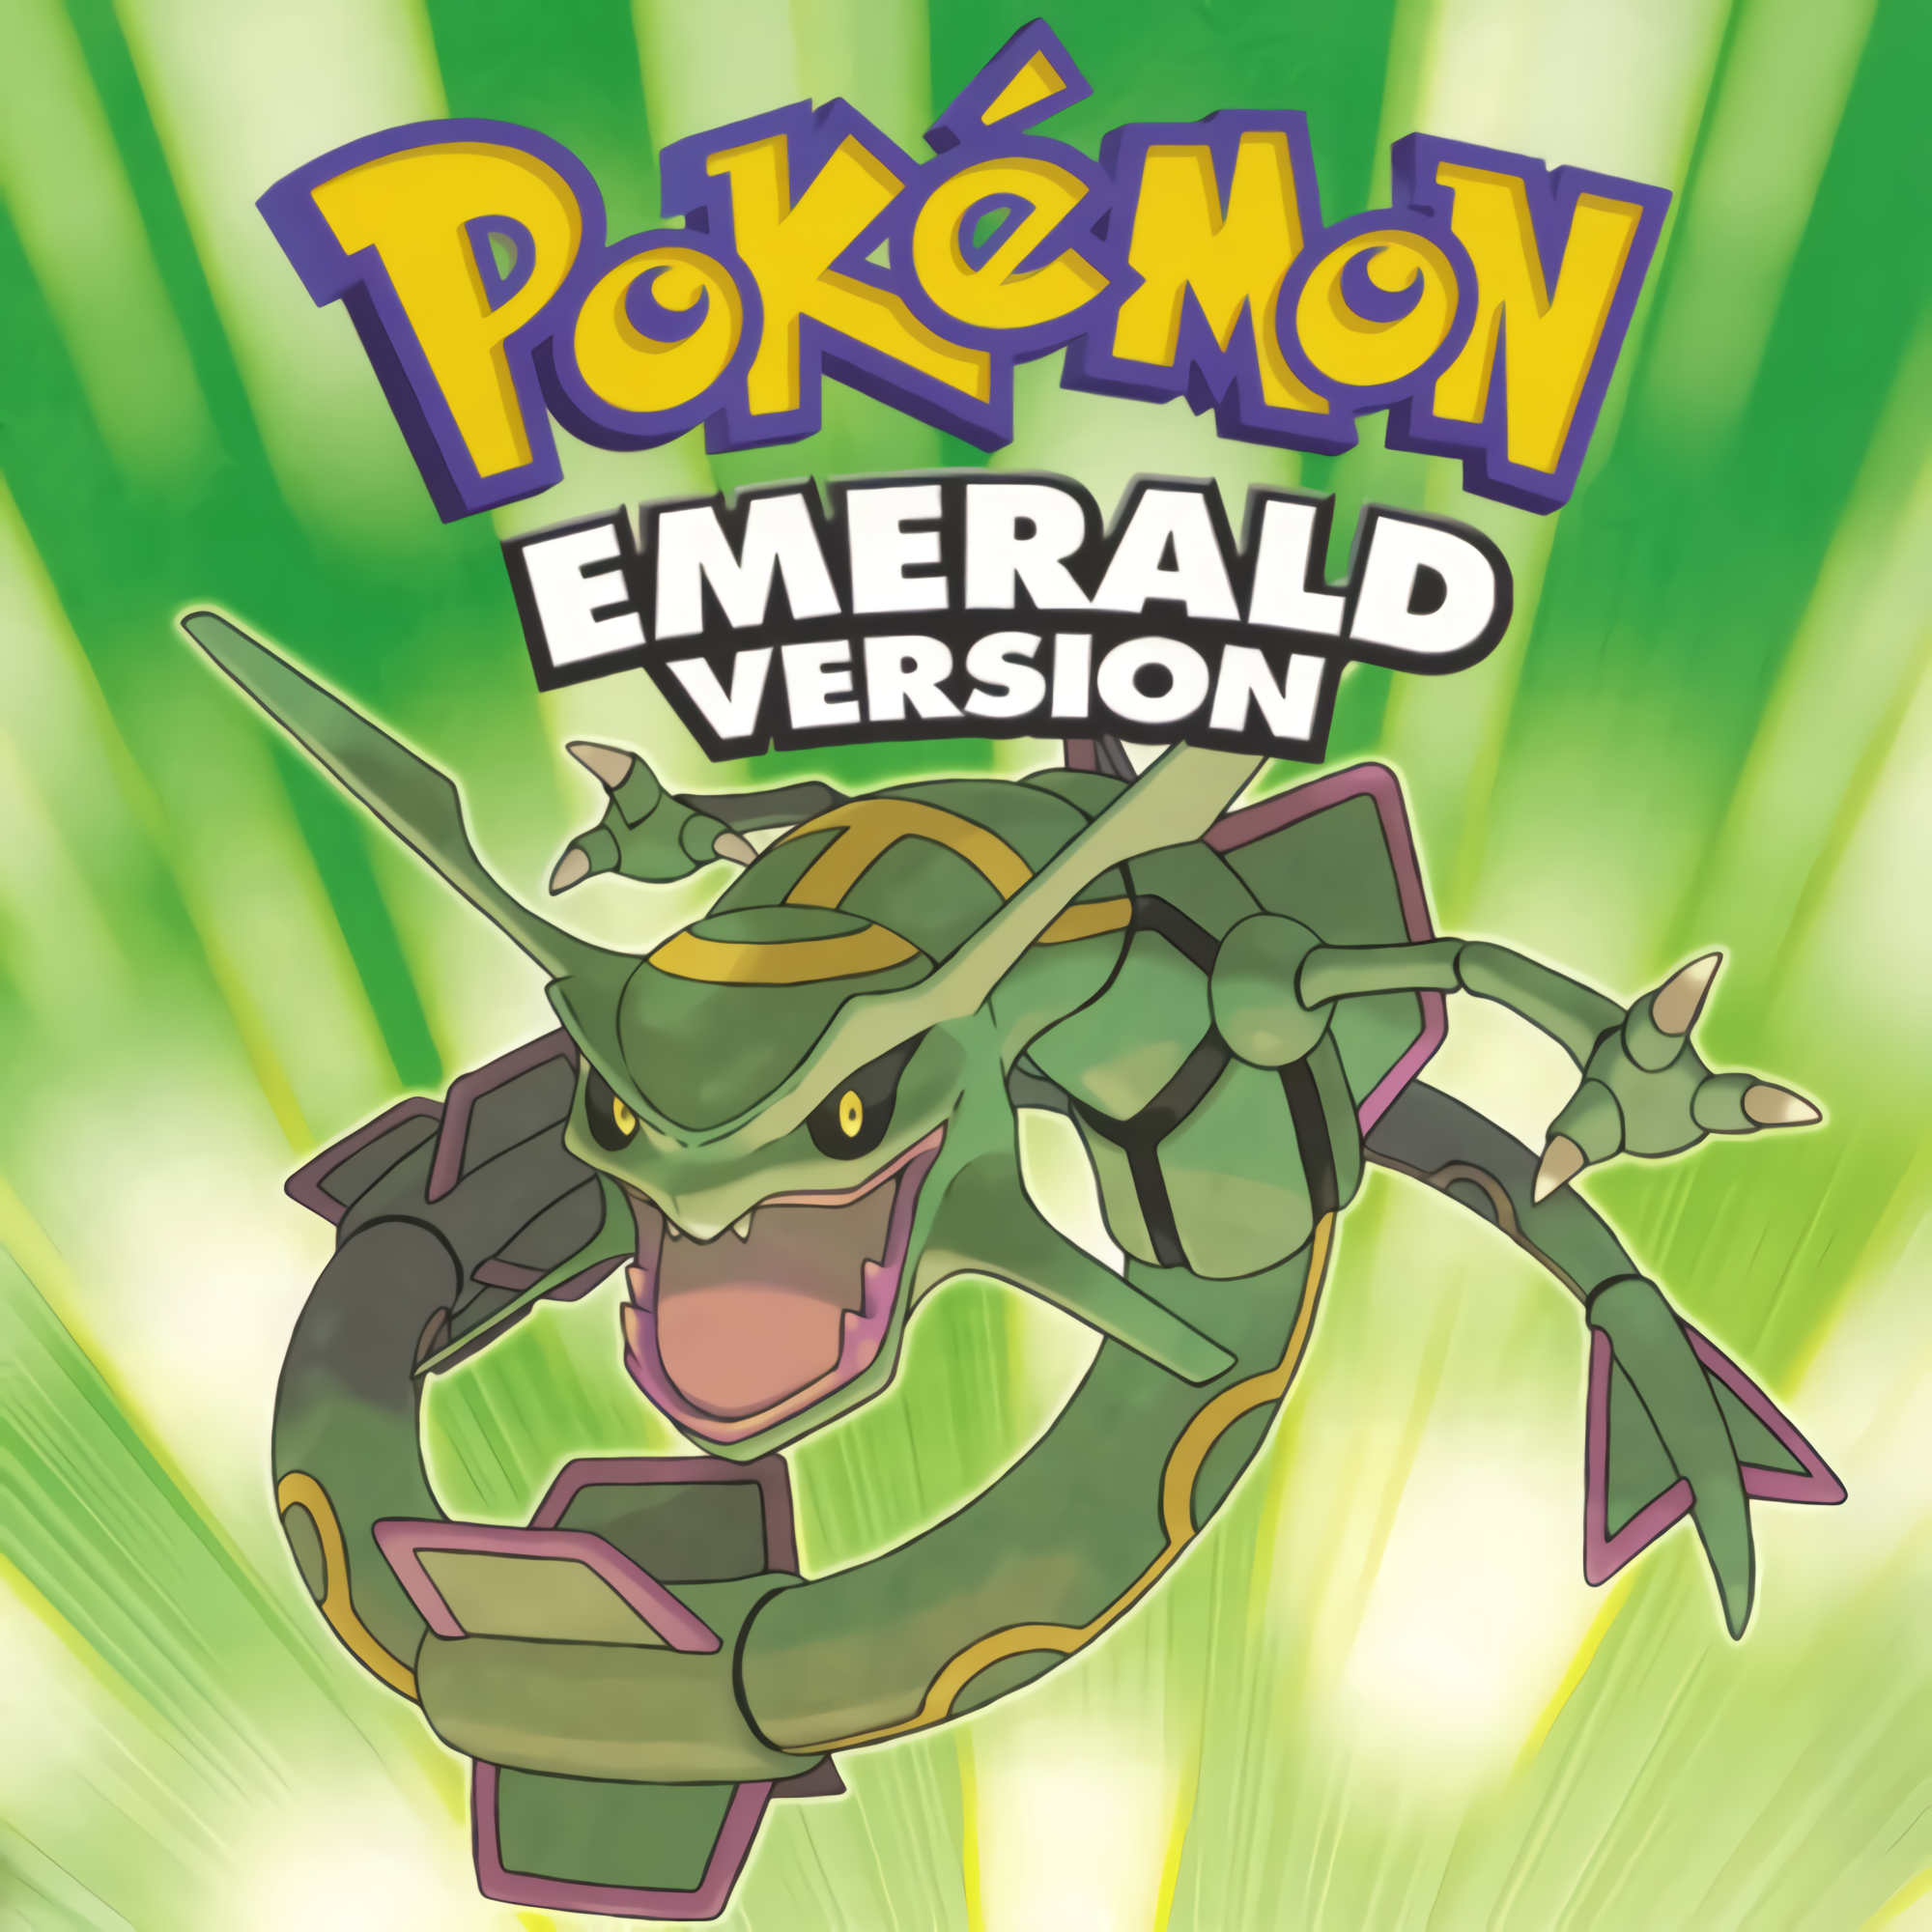 Pokémon Emerald PT-BR - [ROM] 2004 - Agora dá Para Entender! 